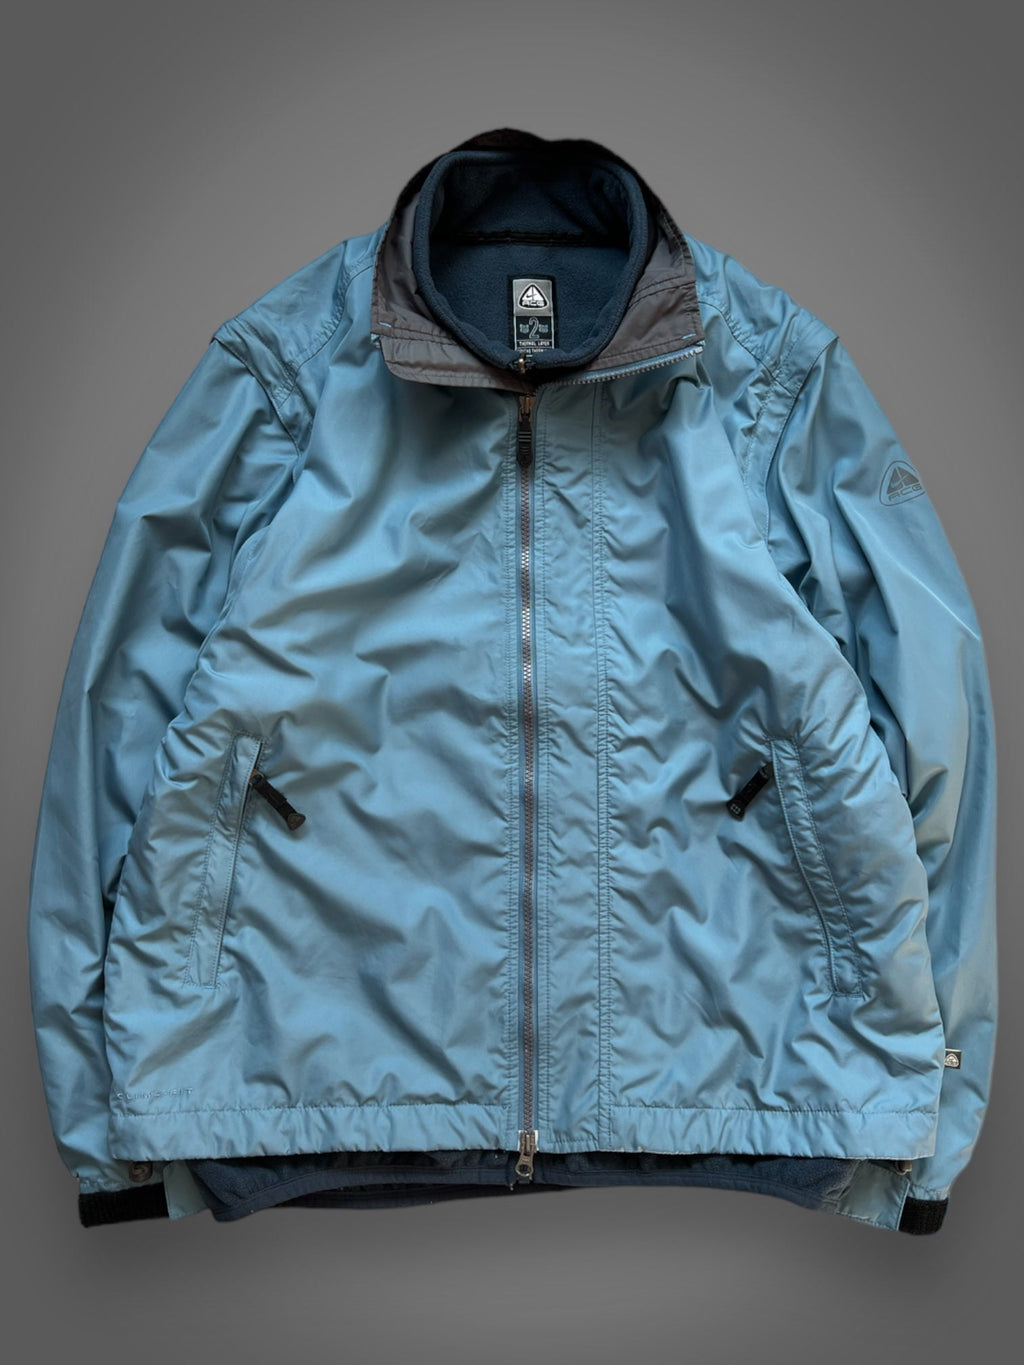 Nike ACG fleece and removable sleeve jacket combo L/XL